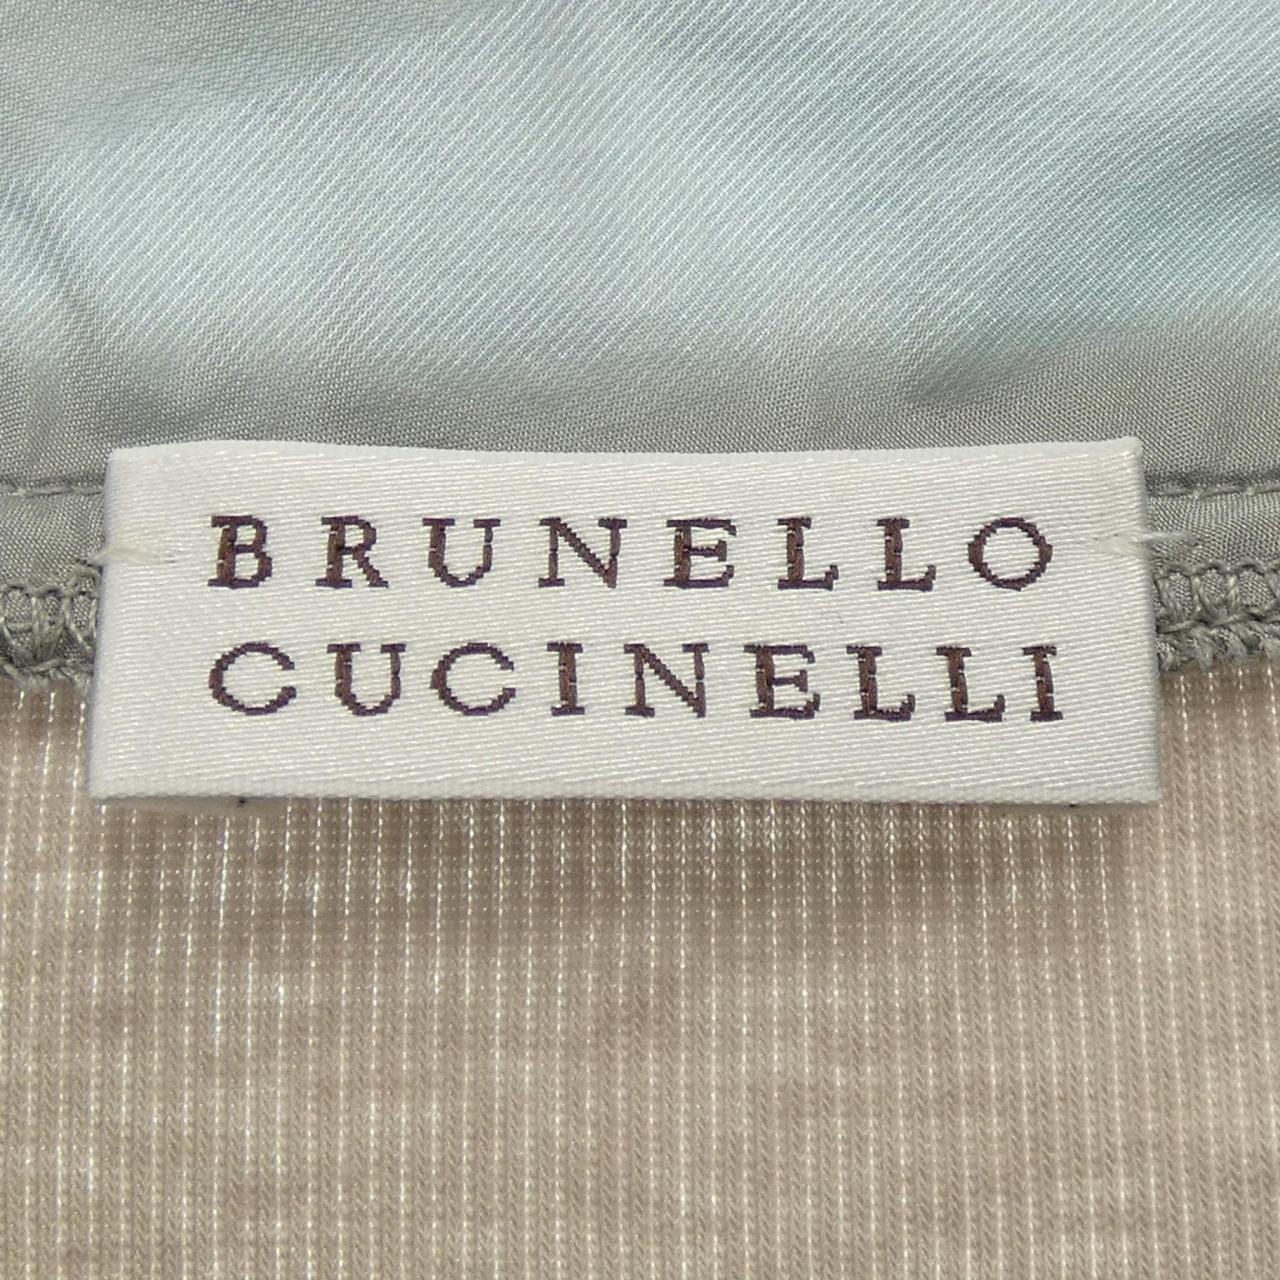 BRUNELLO CUCINELLI CUCINELLI 上衣